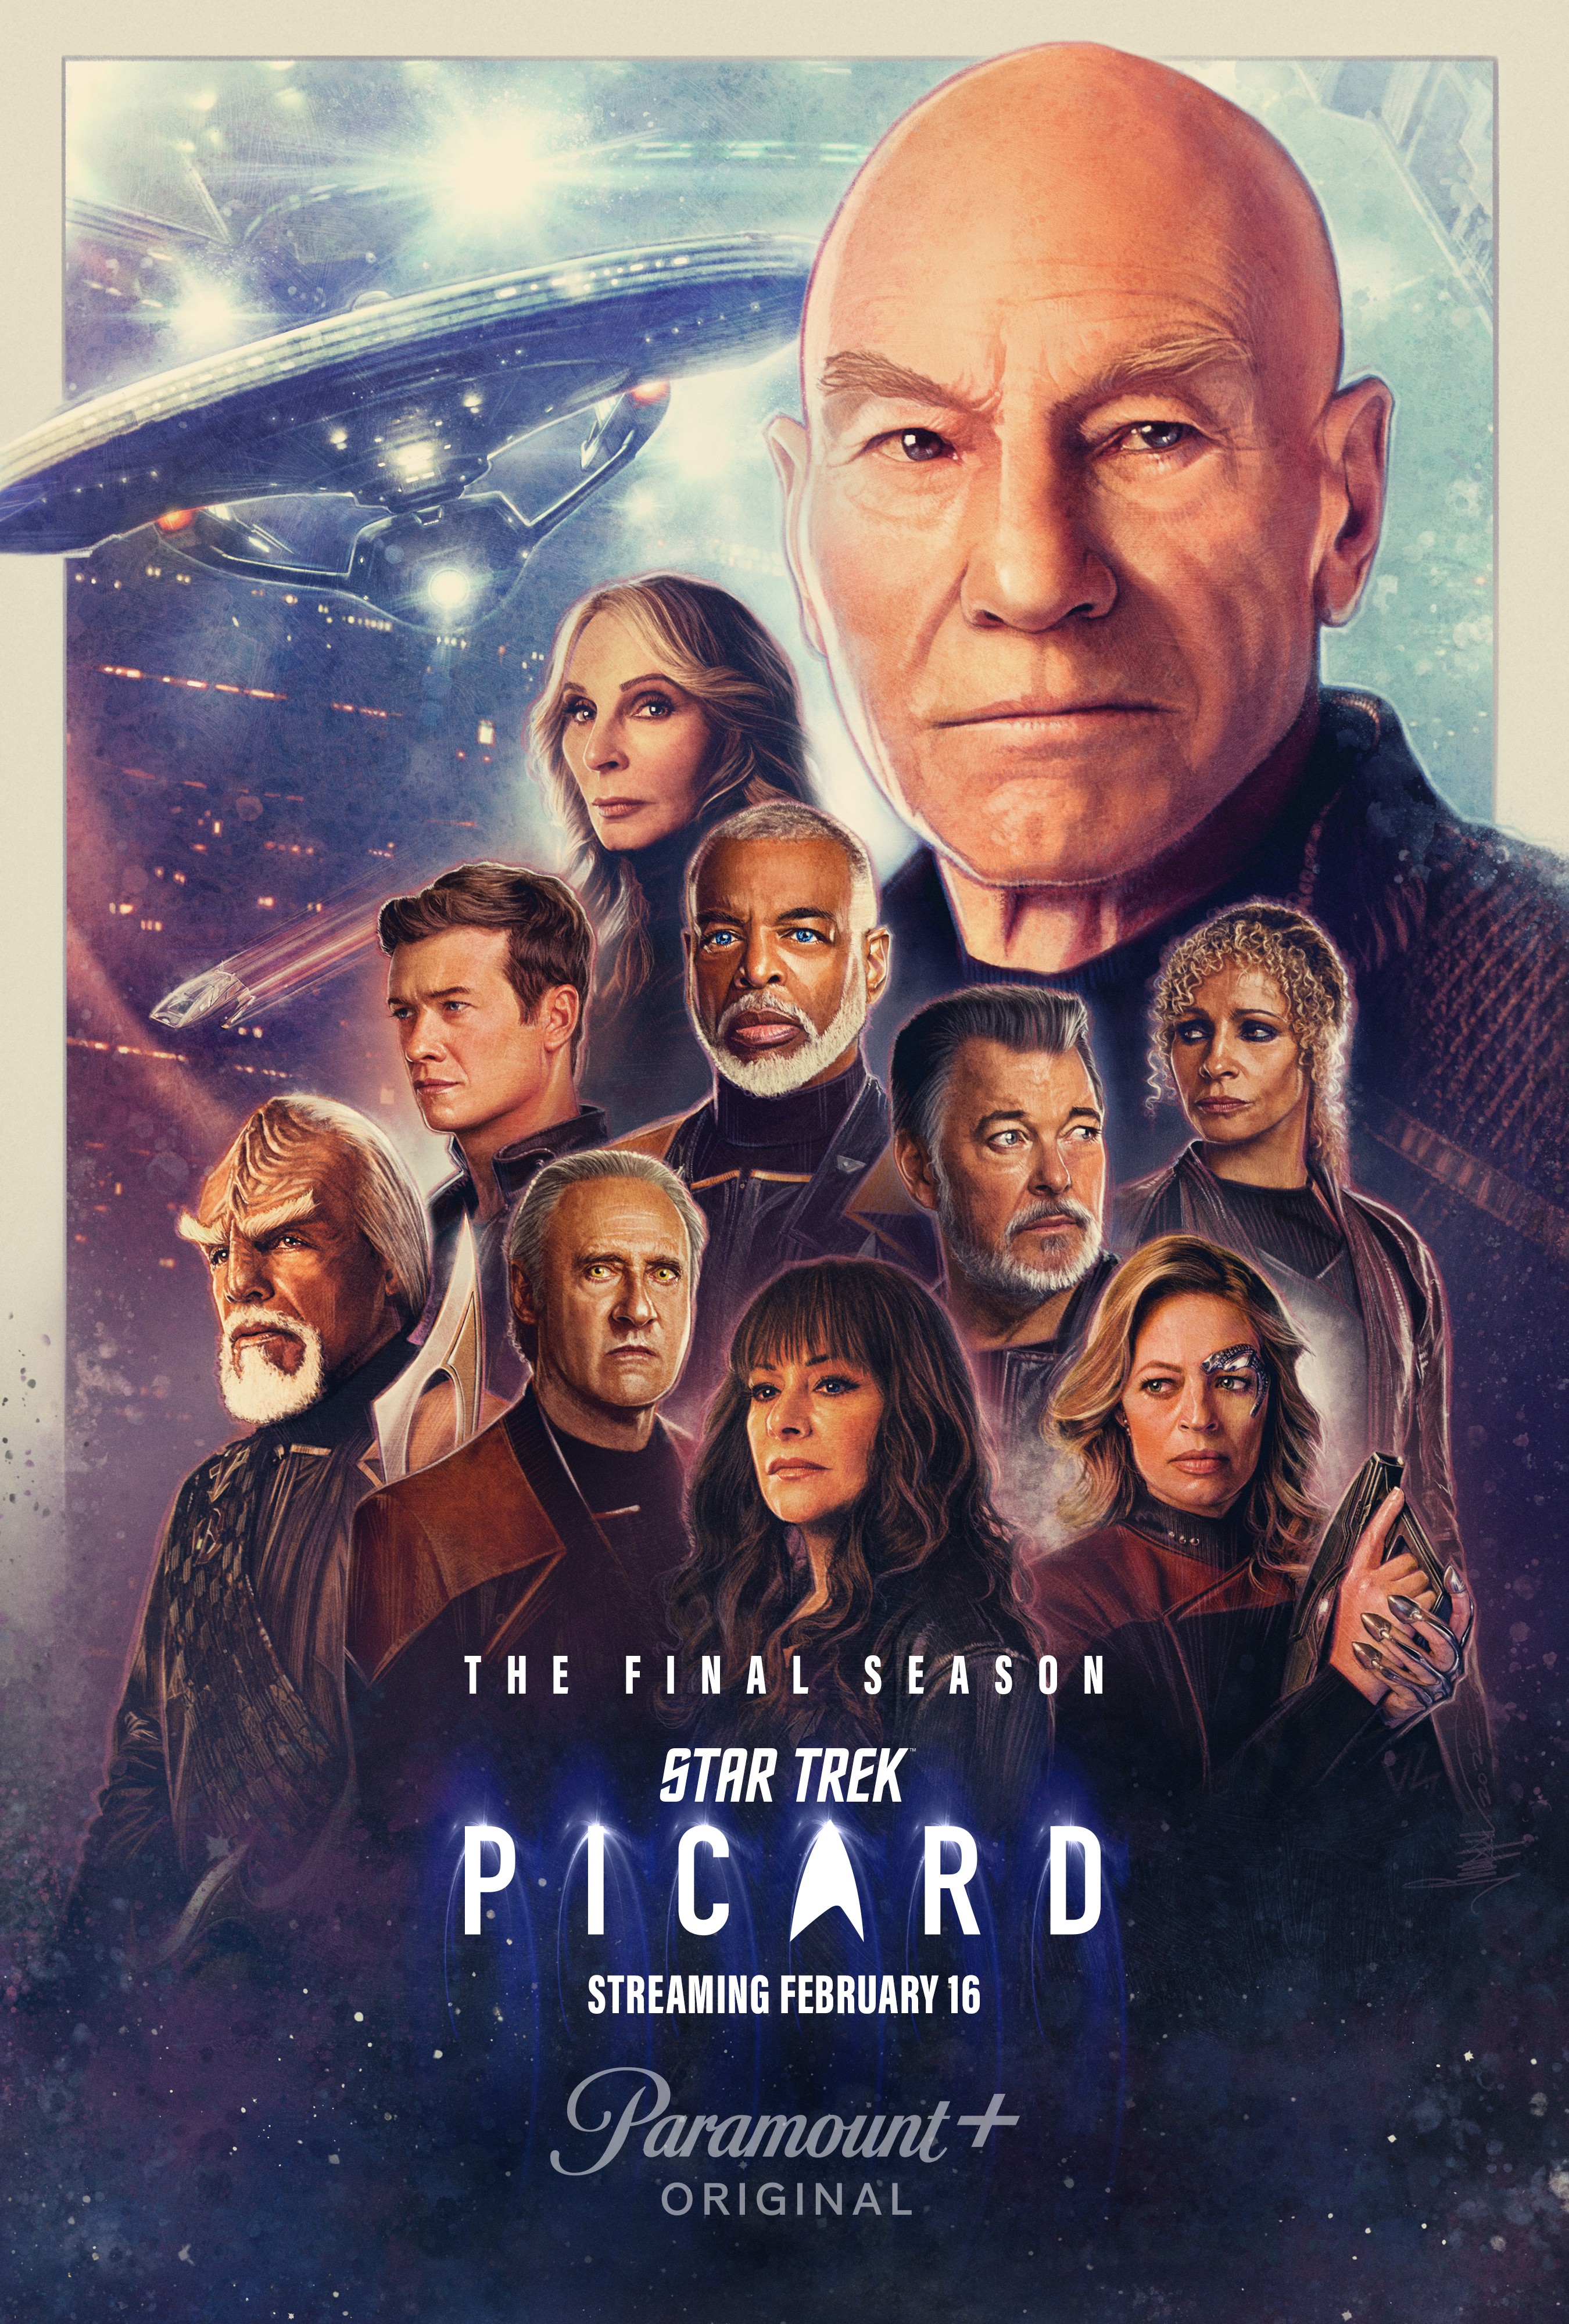 Star Trek: Picard' Series Finale Recap: Saying Farewell - The New